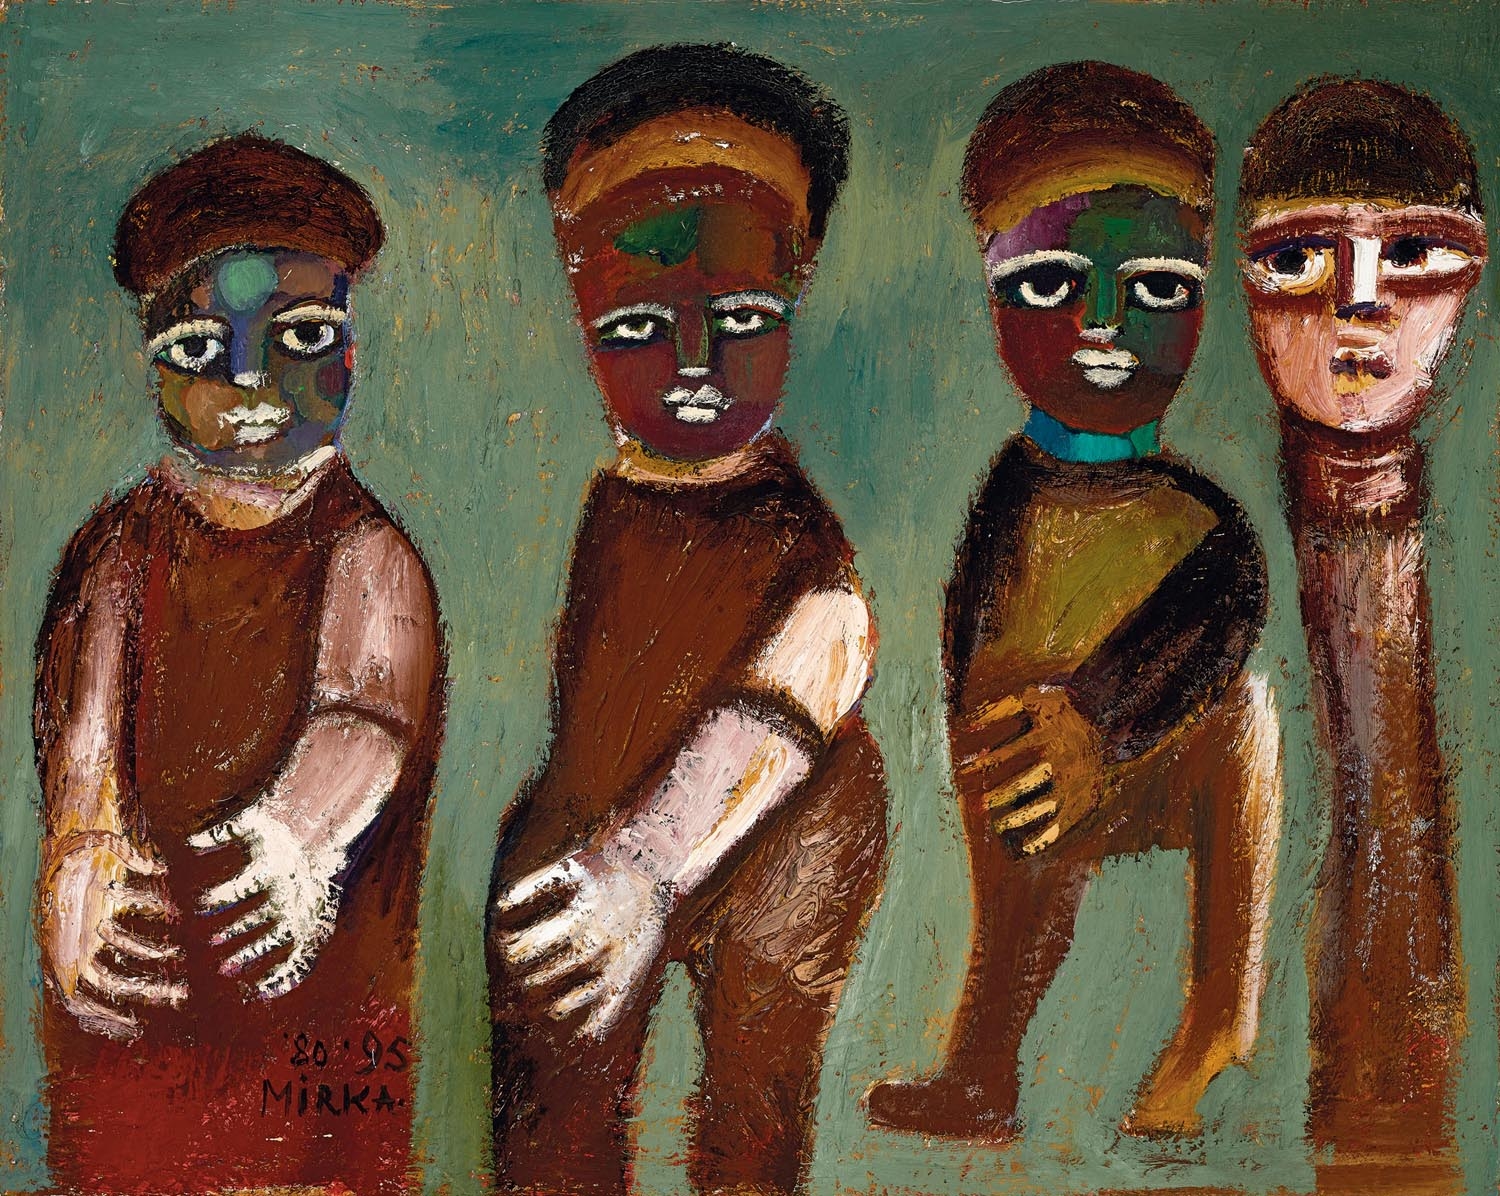 Four Figures by Mirka Mora, 1980-1995